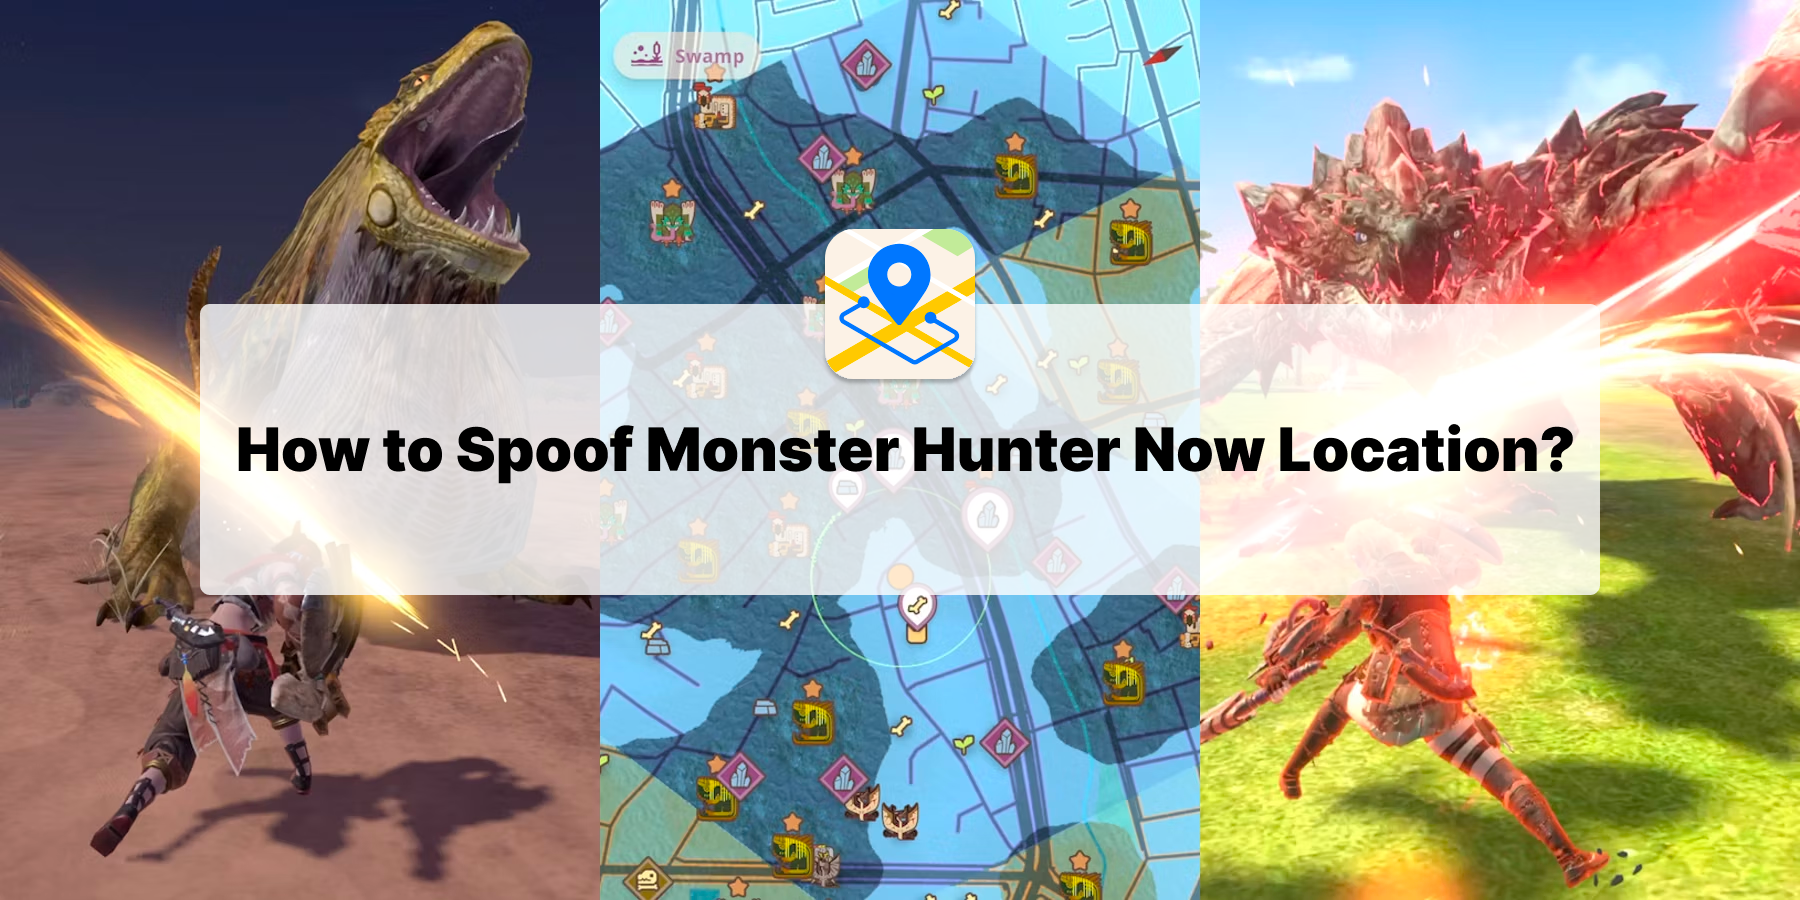 Sut i Spoof Monster Hunter Nawr Lleoliad?